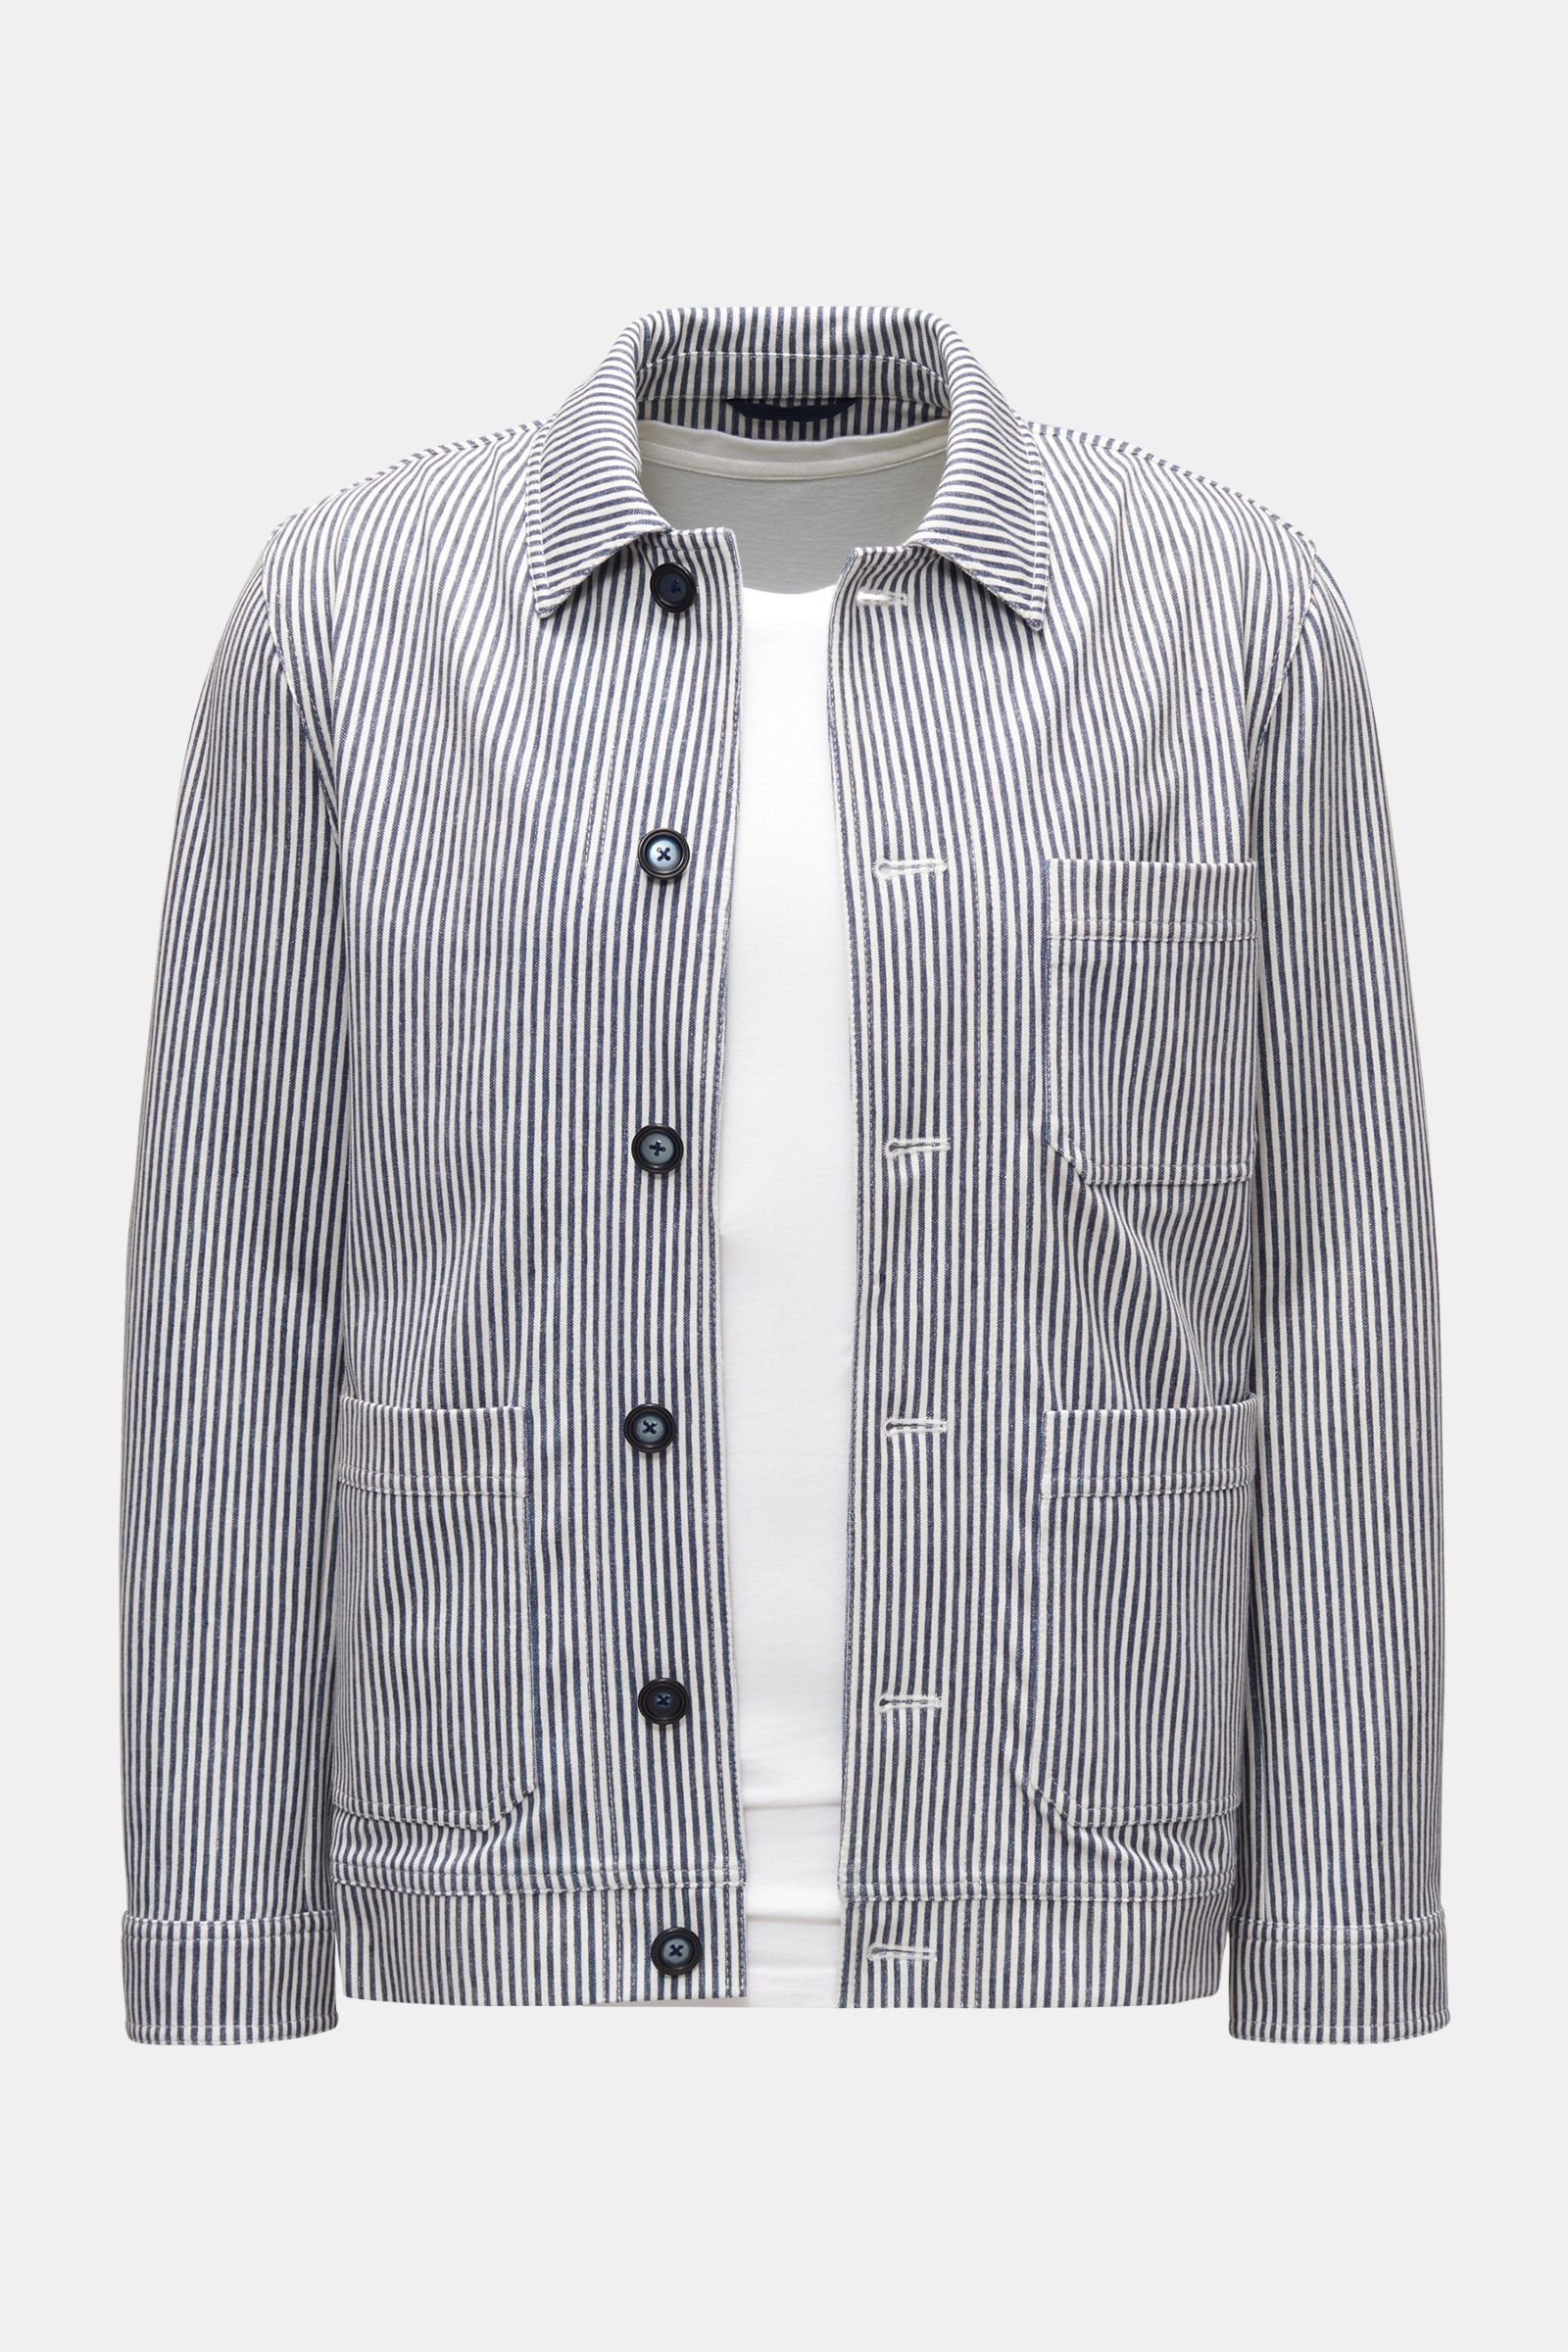 Piqué overshirt in navy/white striped